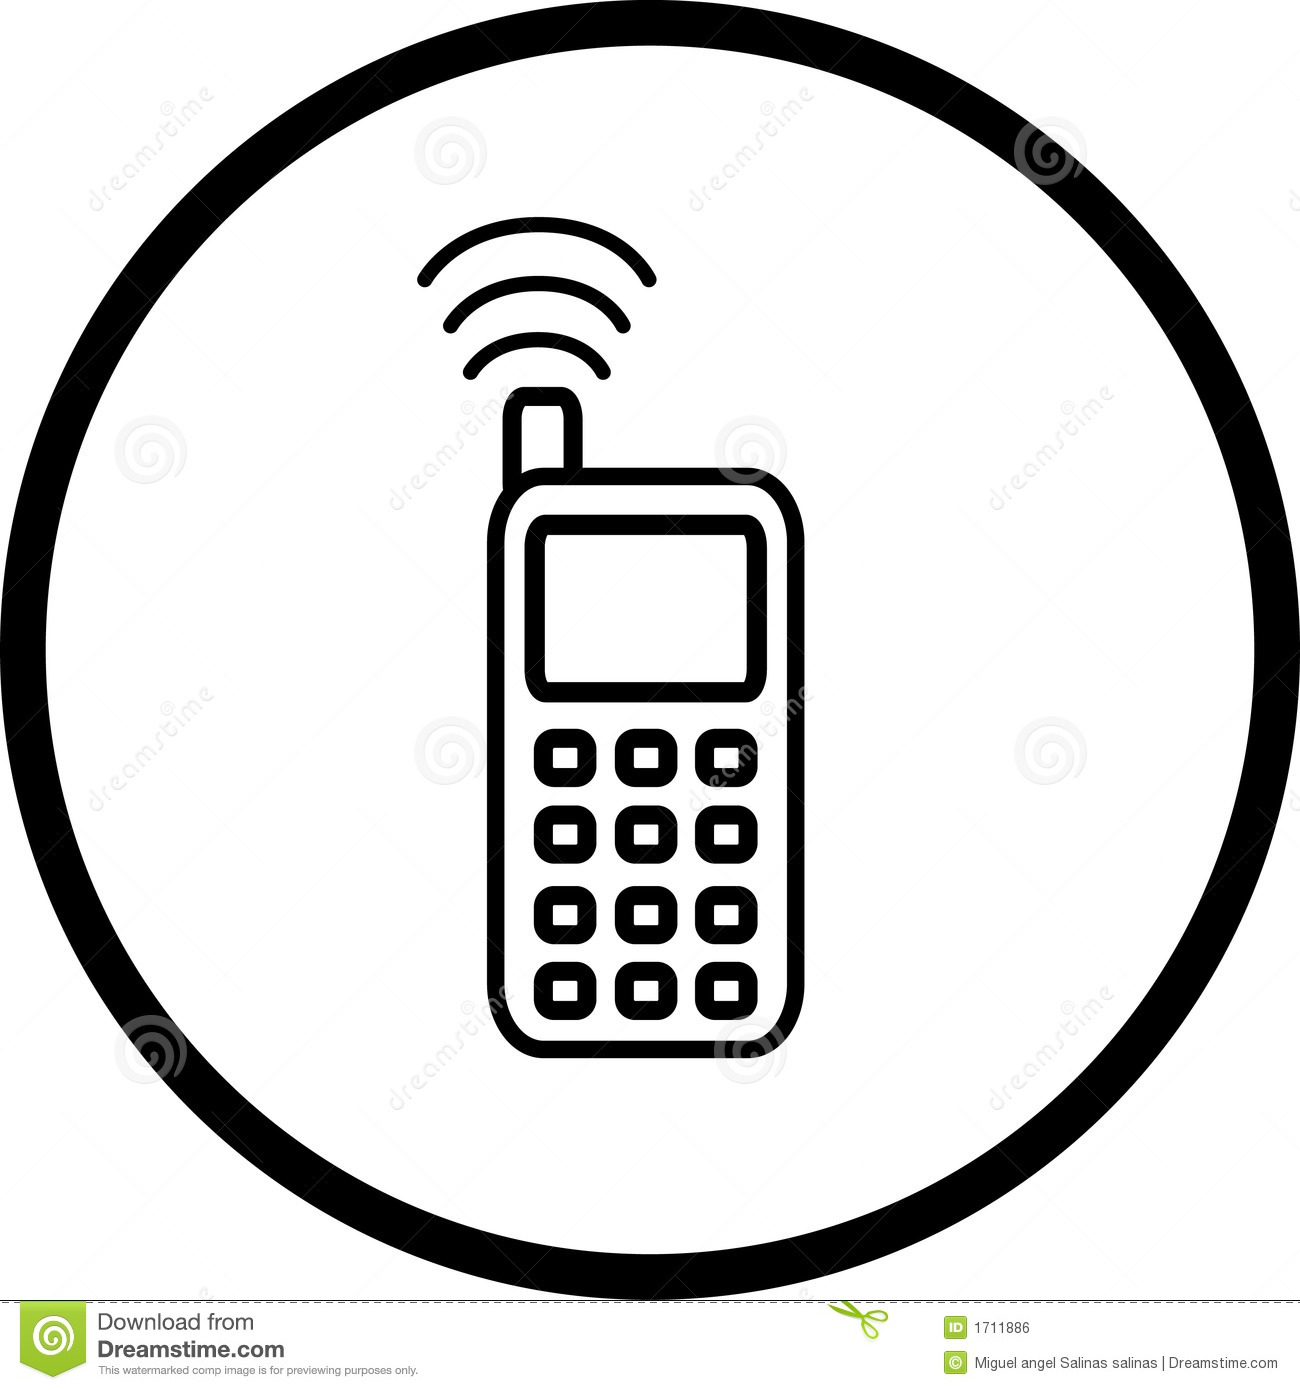 Symbole de t l phone portable 1711886